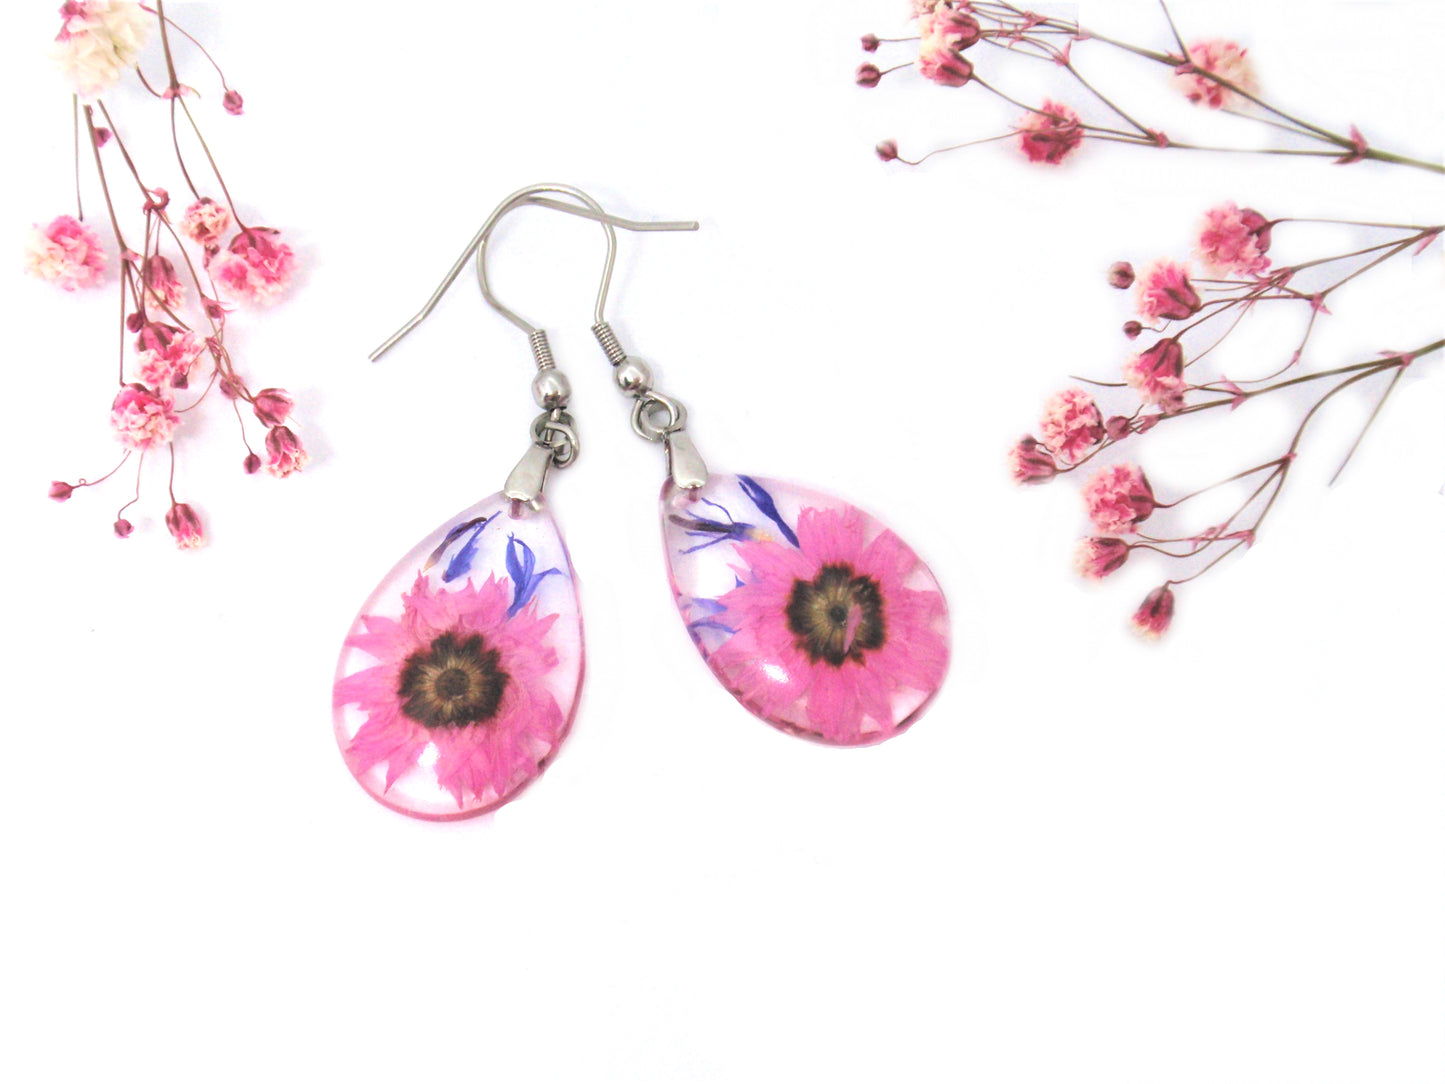 Handmade earrings with real flowers